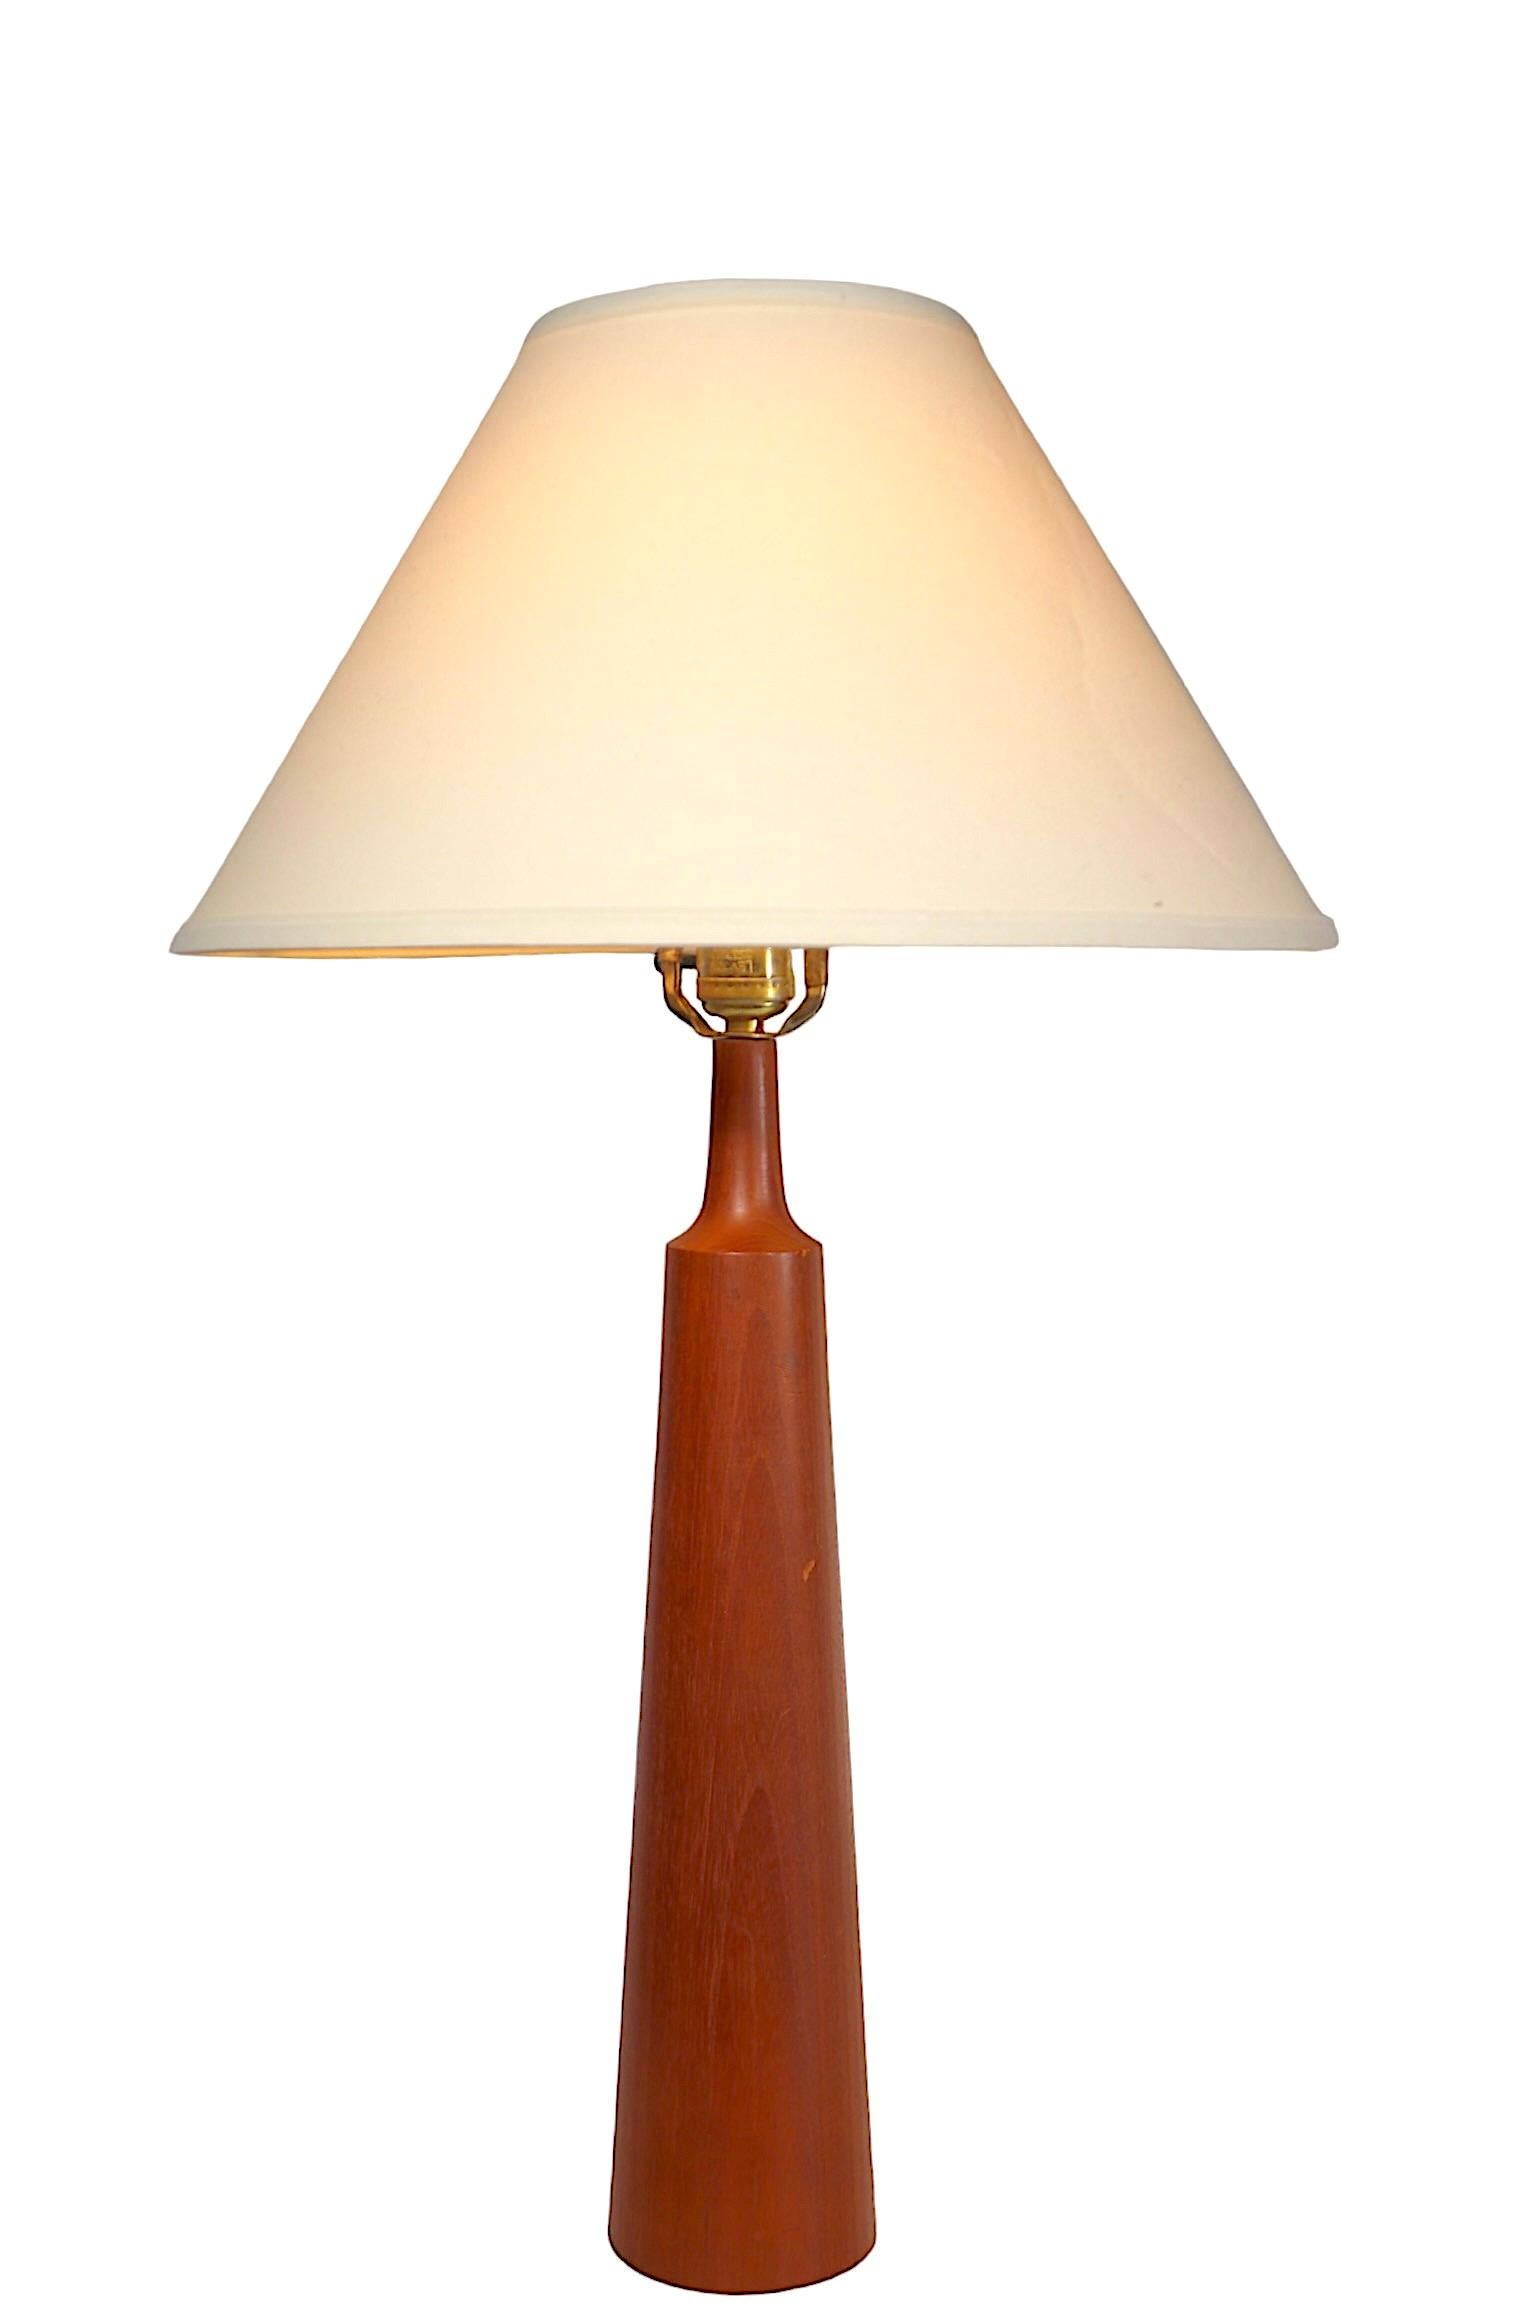 Scandinavian Modern Danish Mid Century Teak Table Lamp c 1950/60’s For Sale